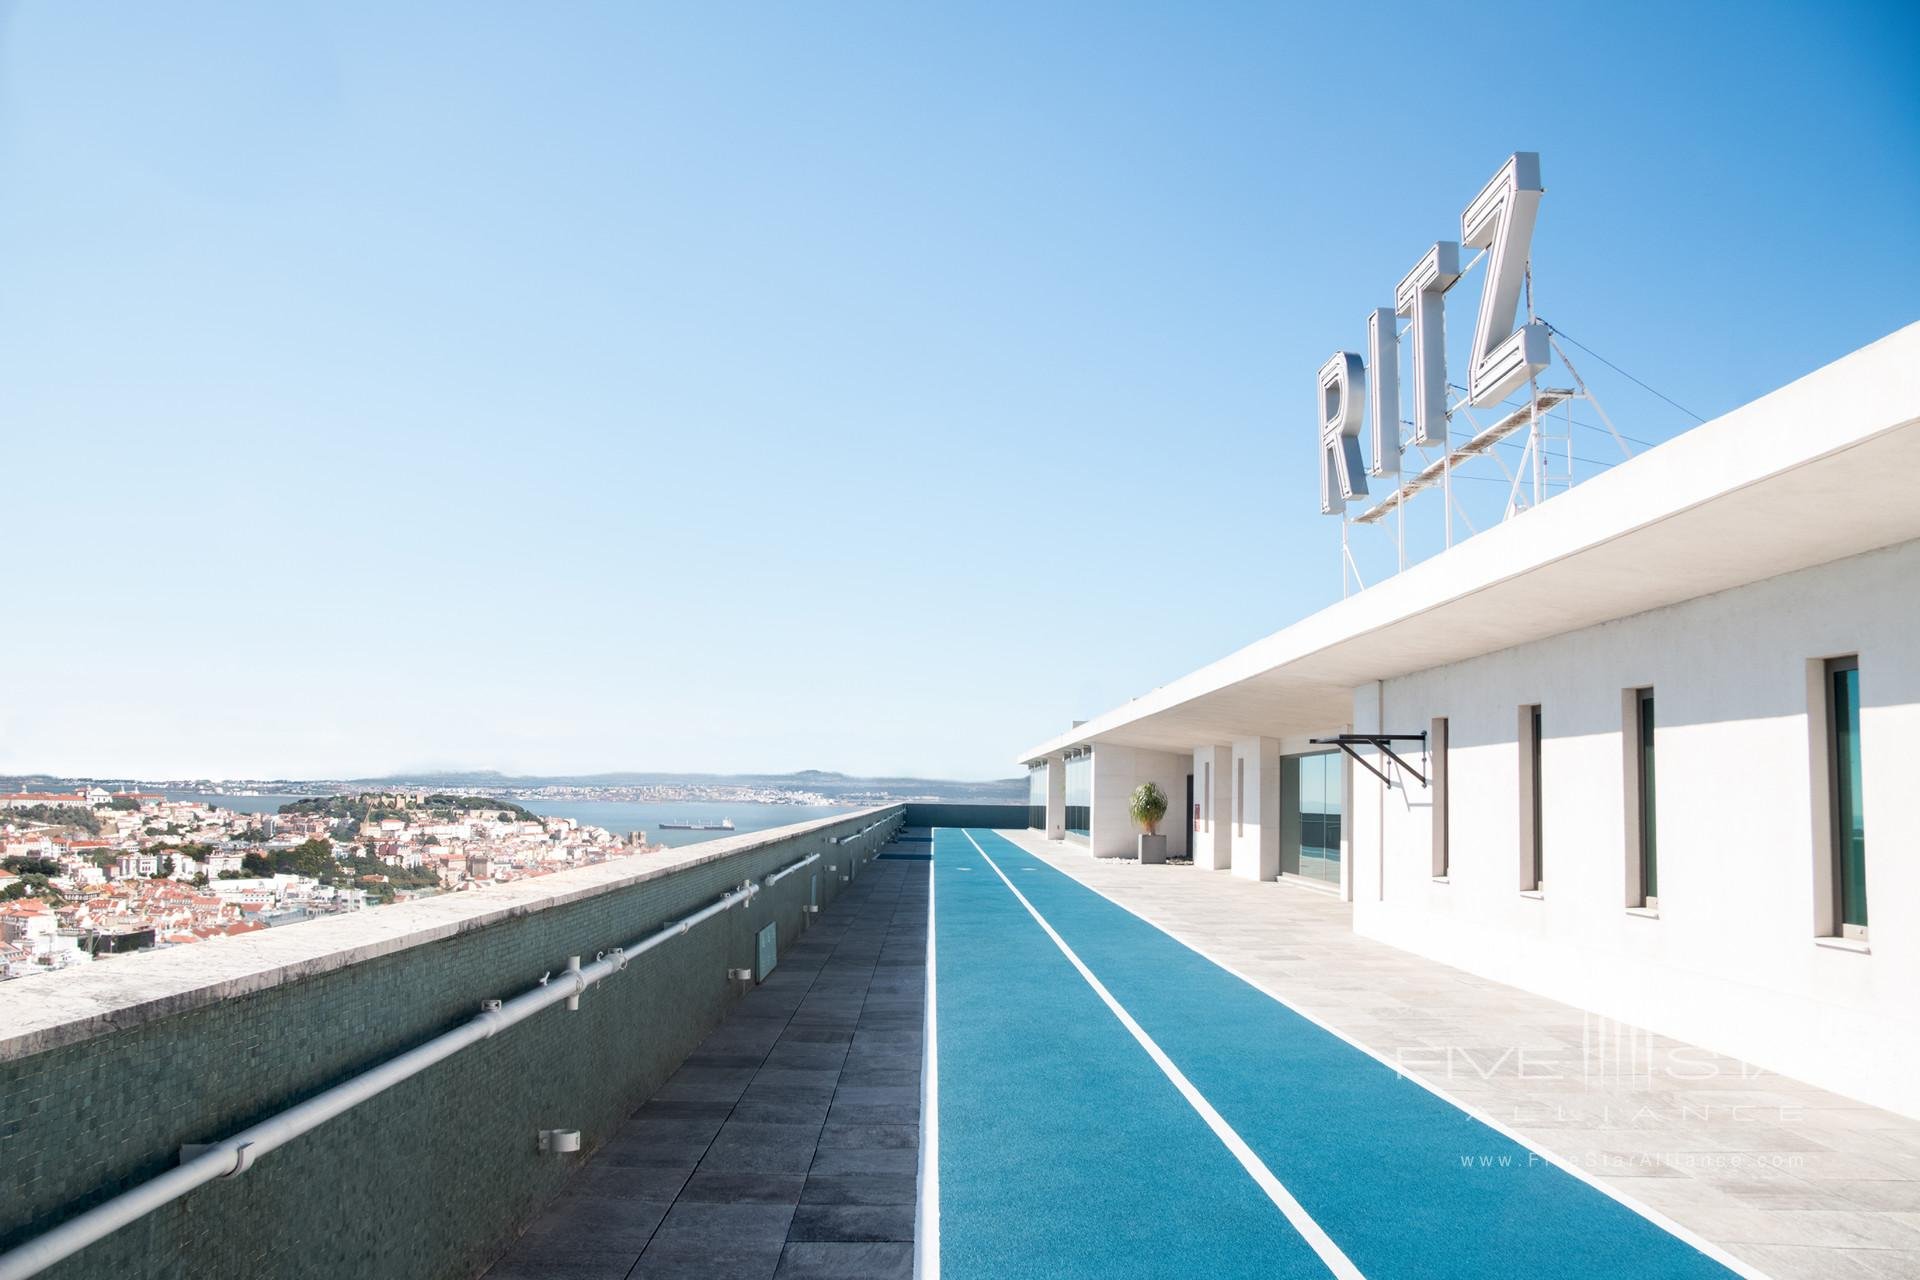 Ritz Four Seasons - Lisbon, Portugal (Copy)